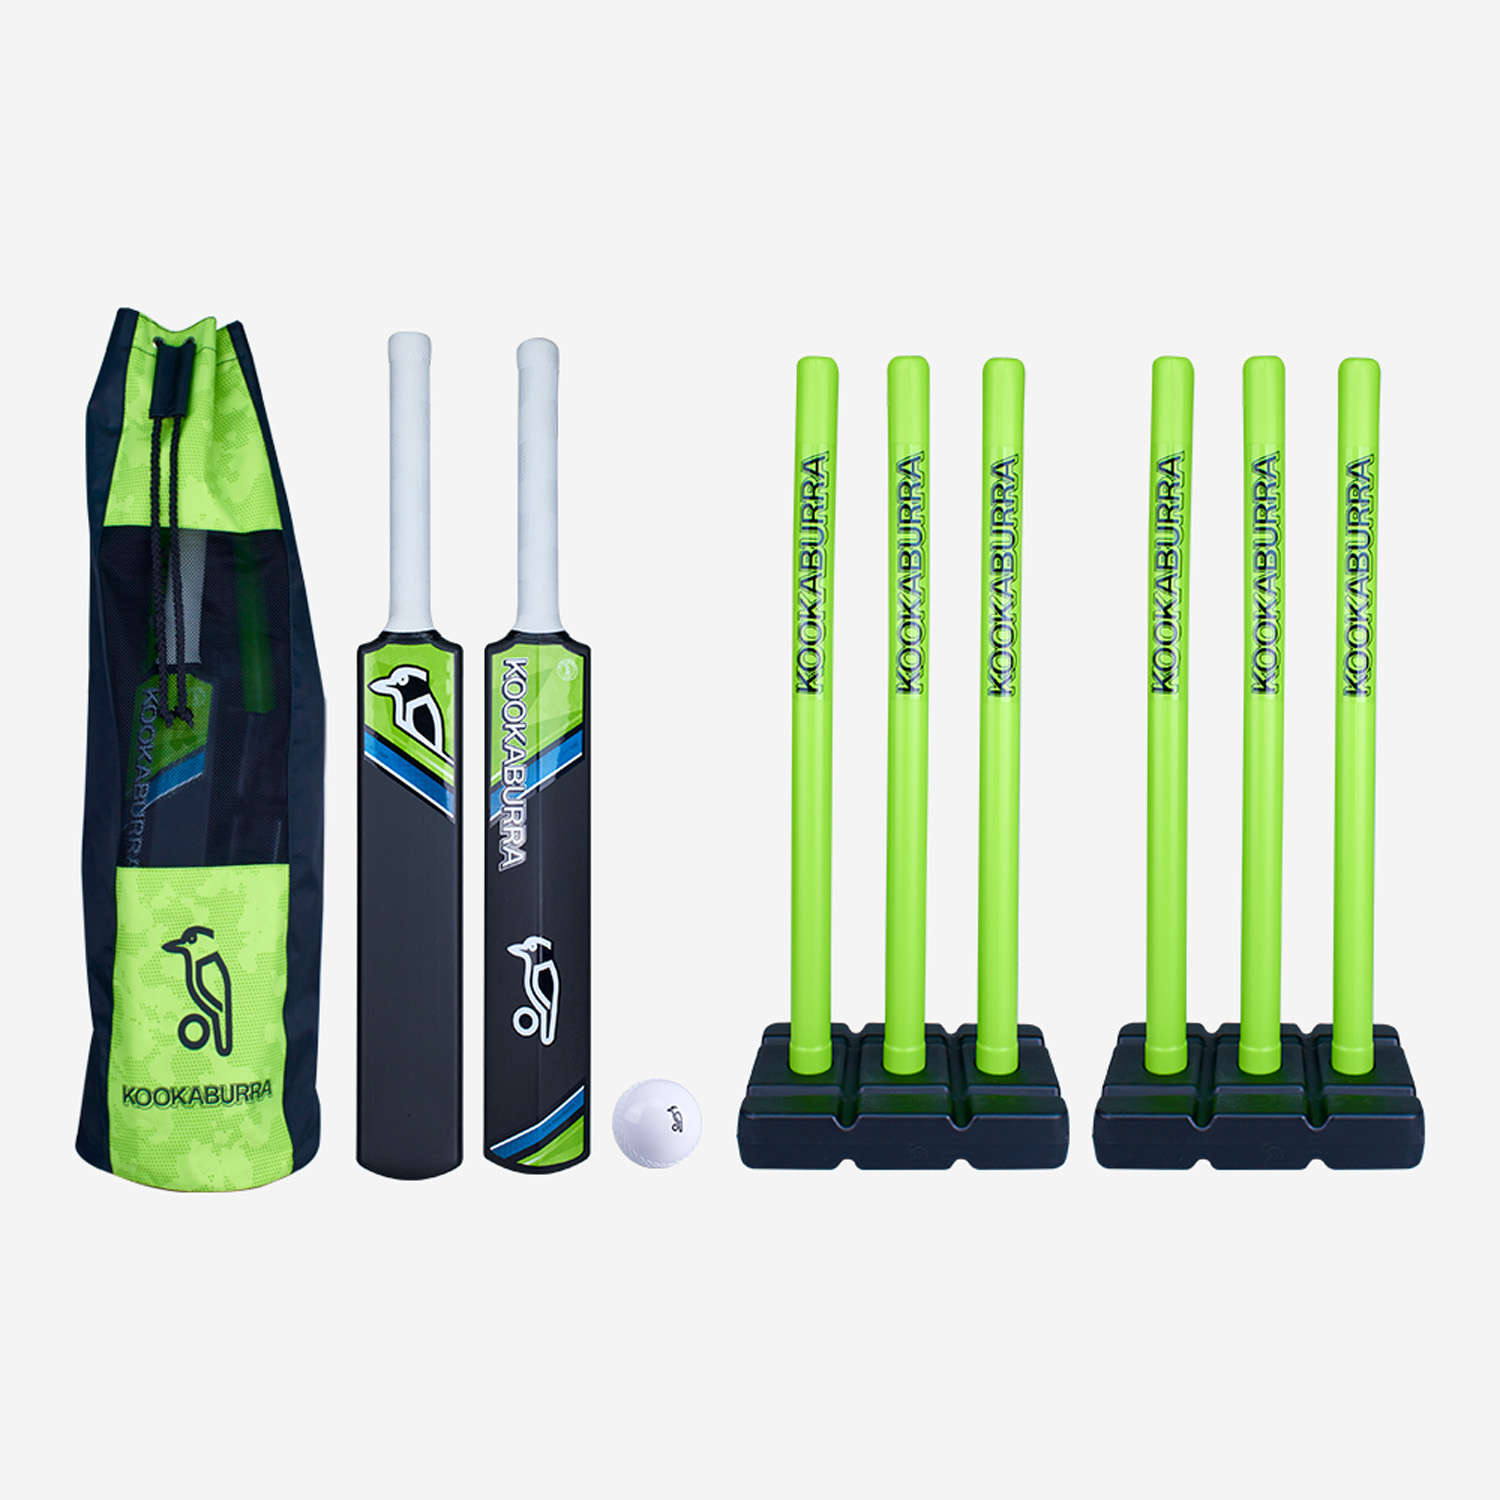 Kookaburra Blast Plus Cricket Set - ideal for fun at the beach or in the garden